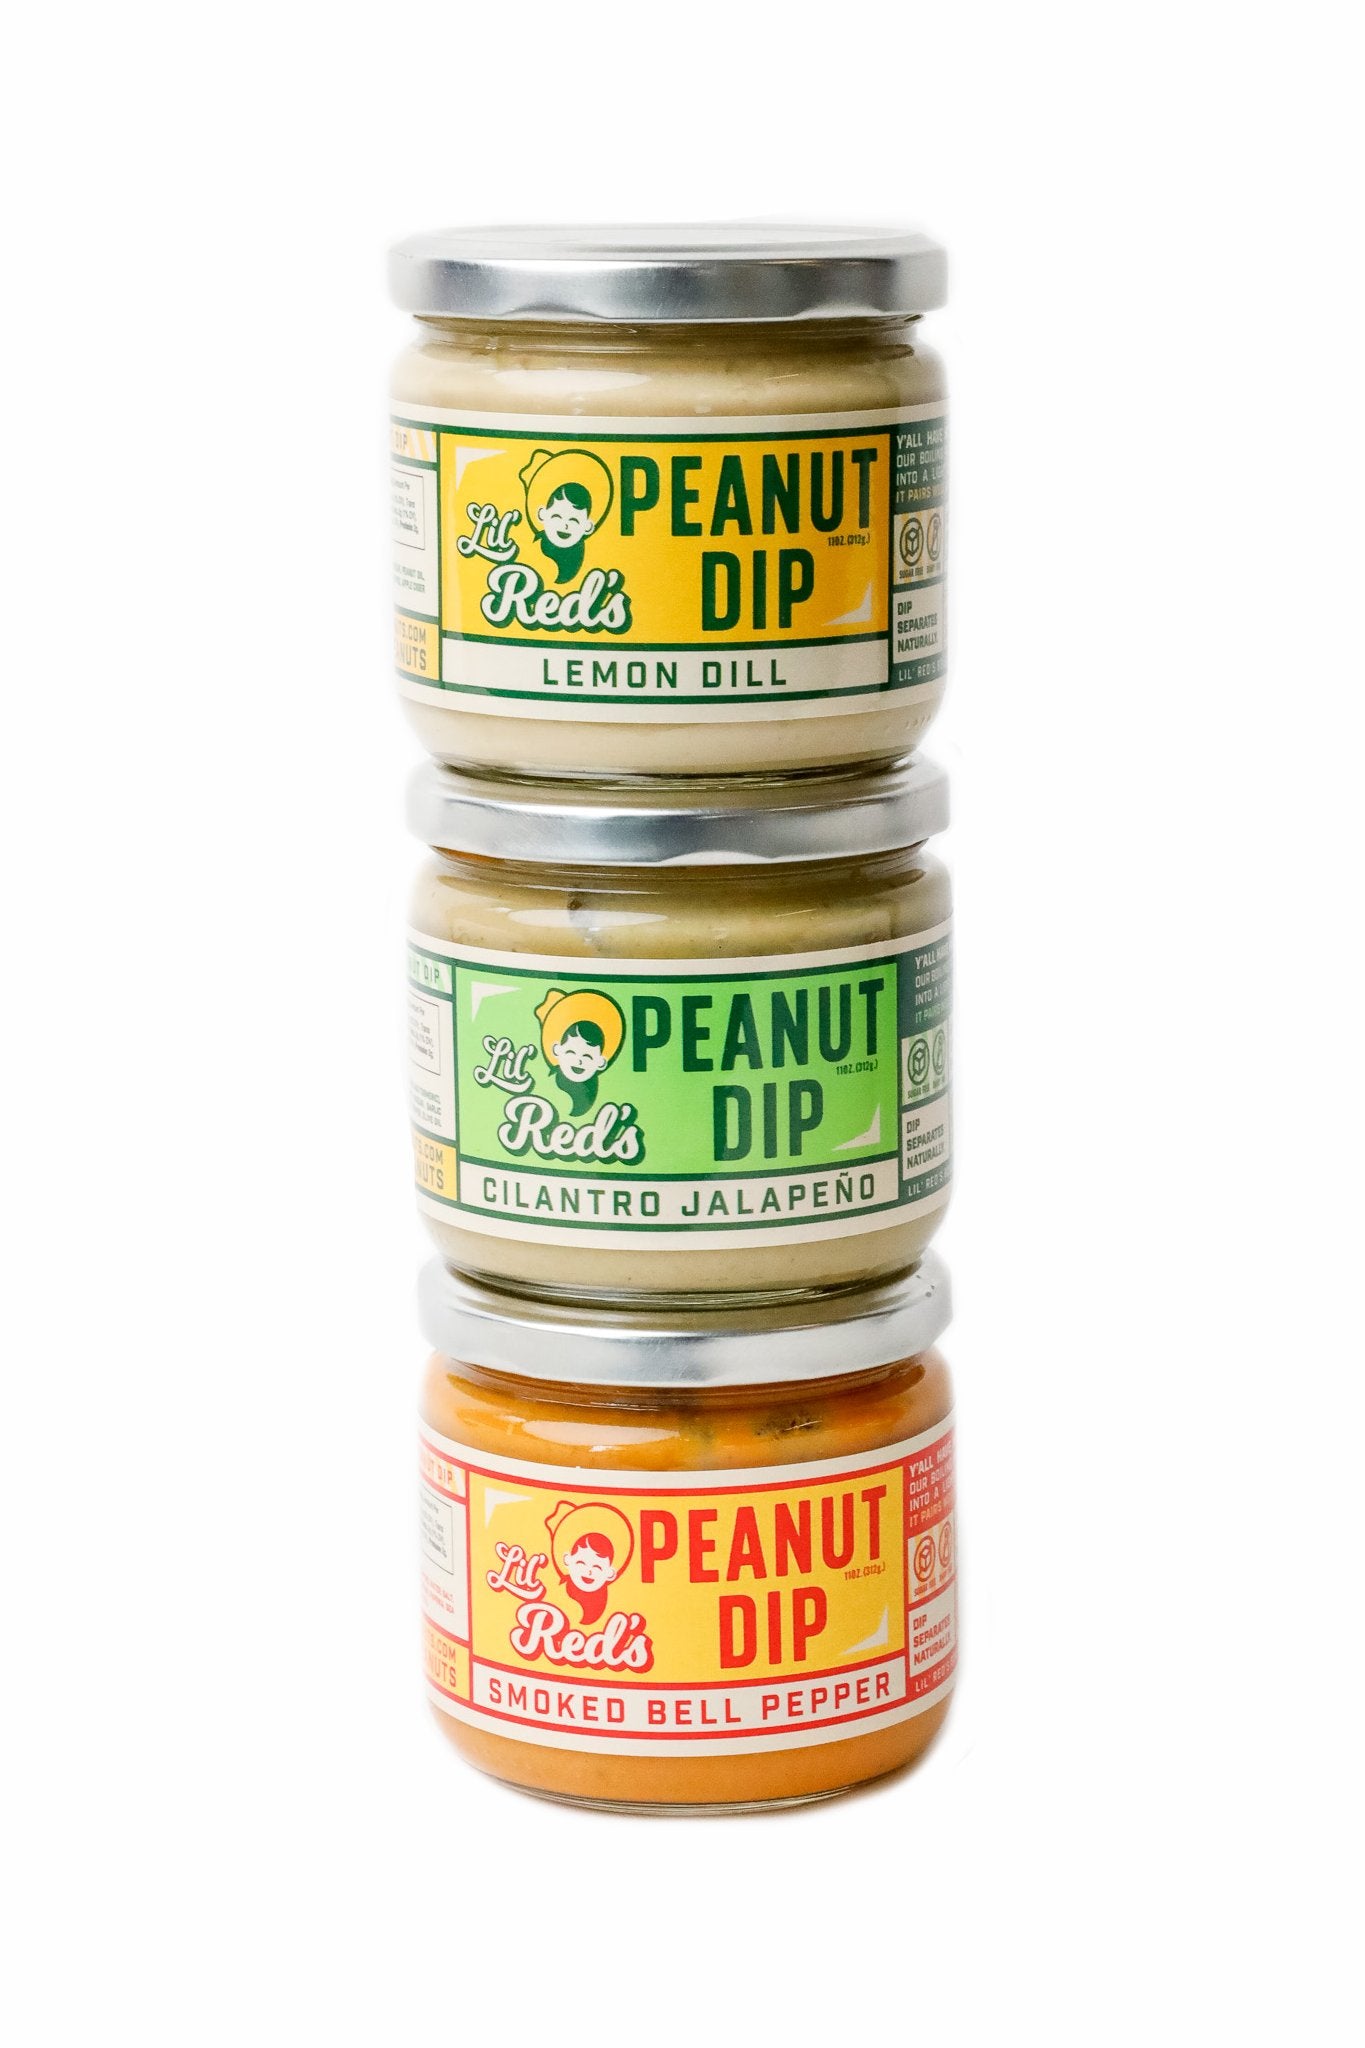 Lil' Red's Peanut Dips (Boiled Peanut Dip)